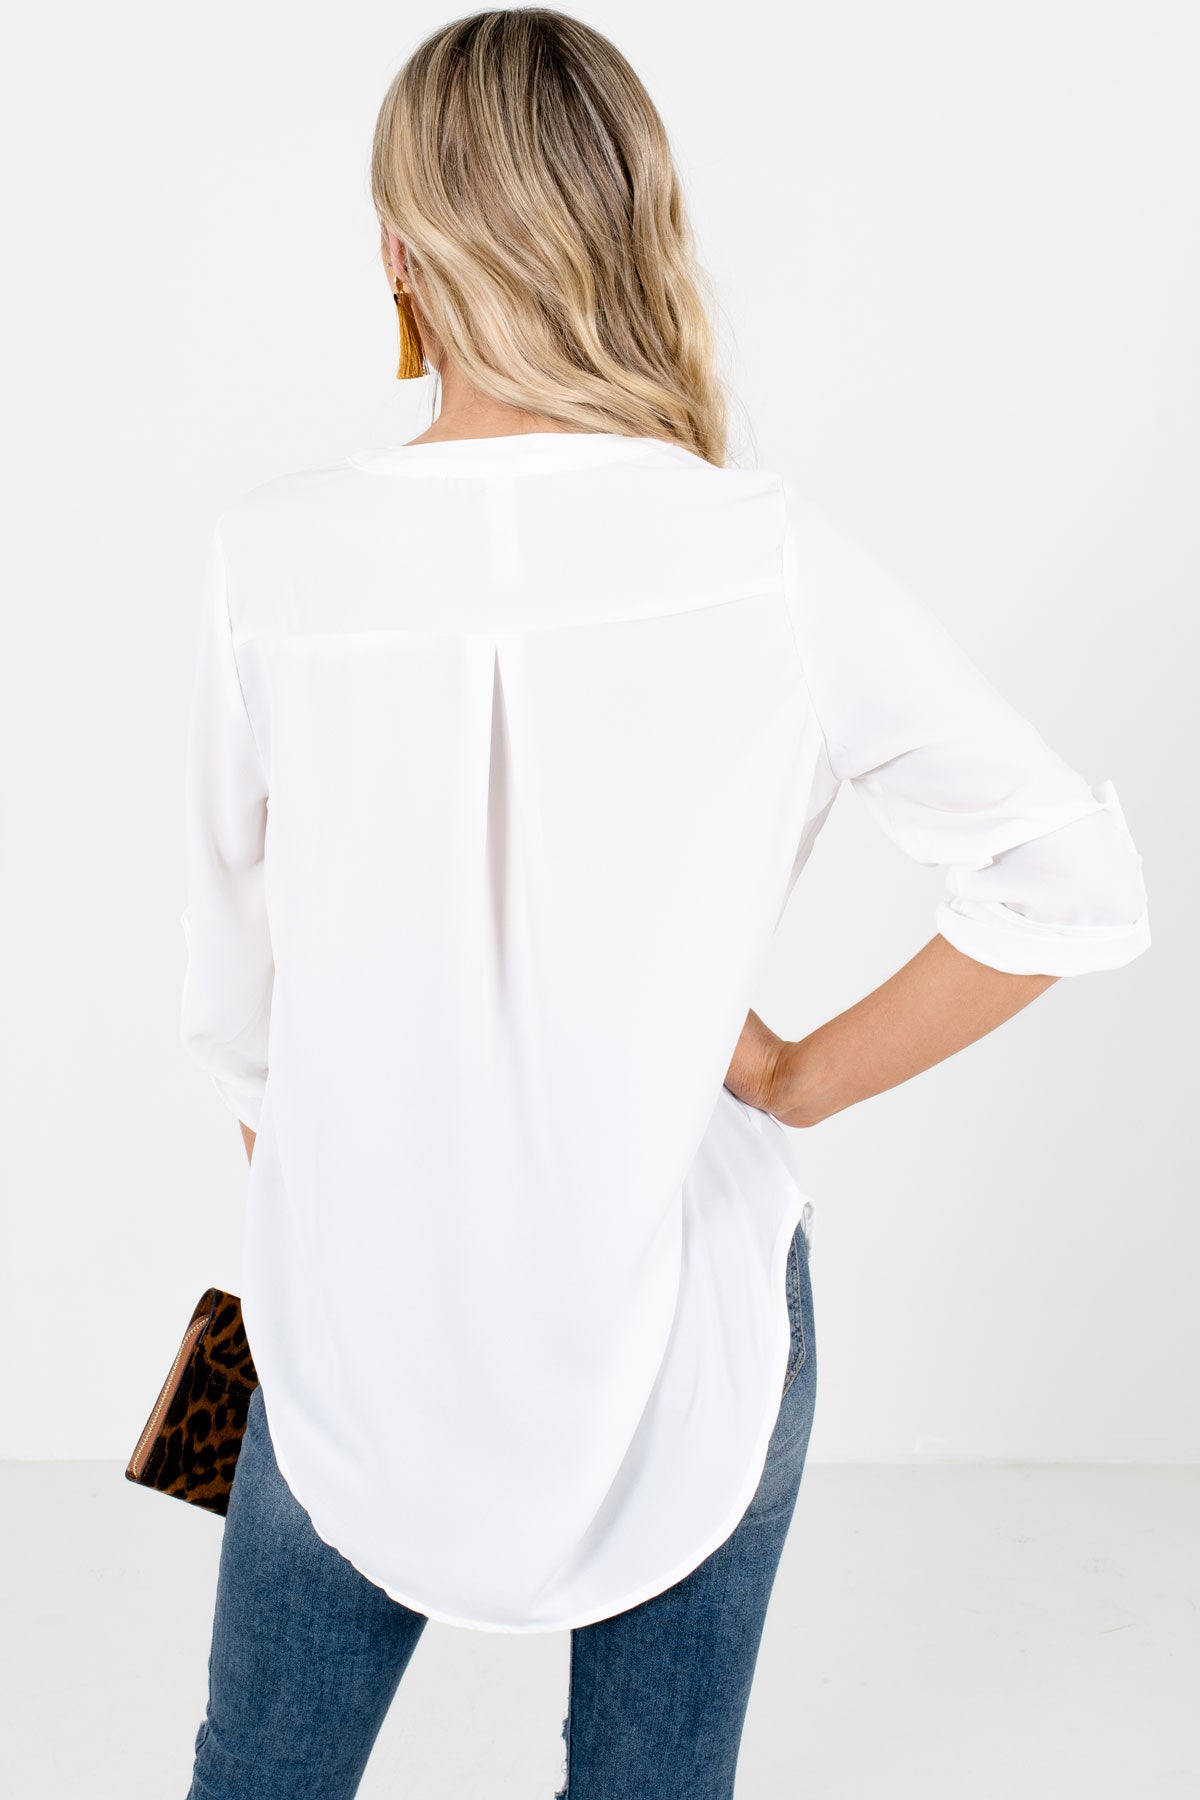 Women's White 3/4 Length Sleeve Boutique Blouse